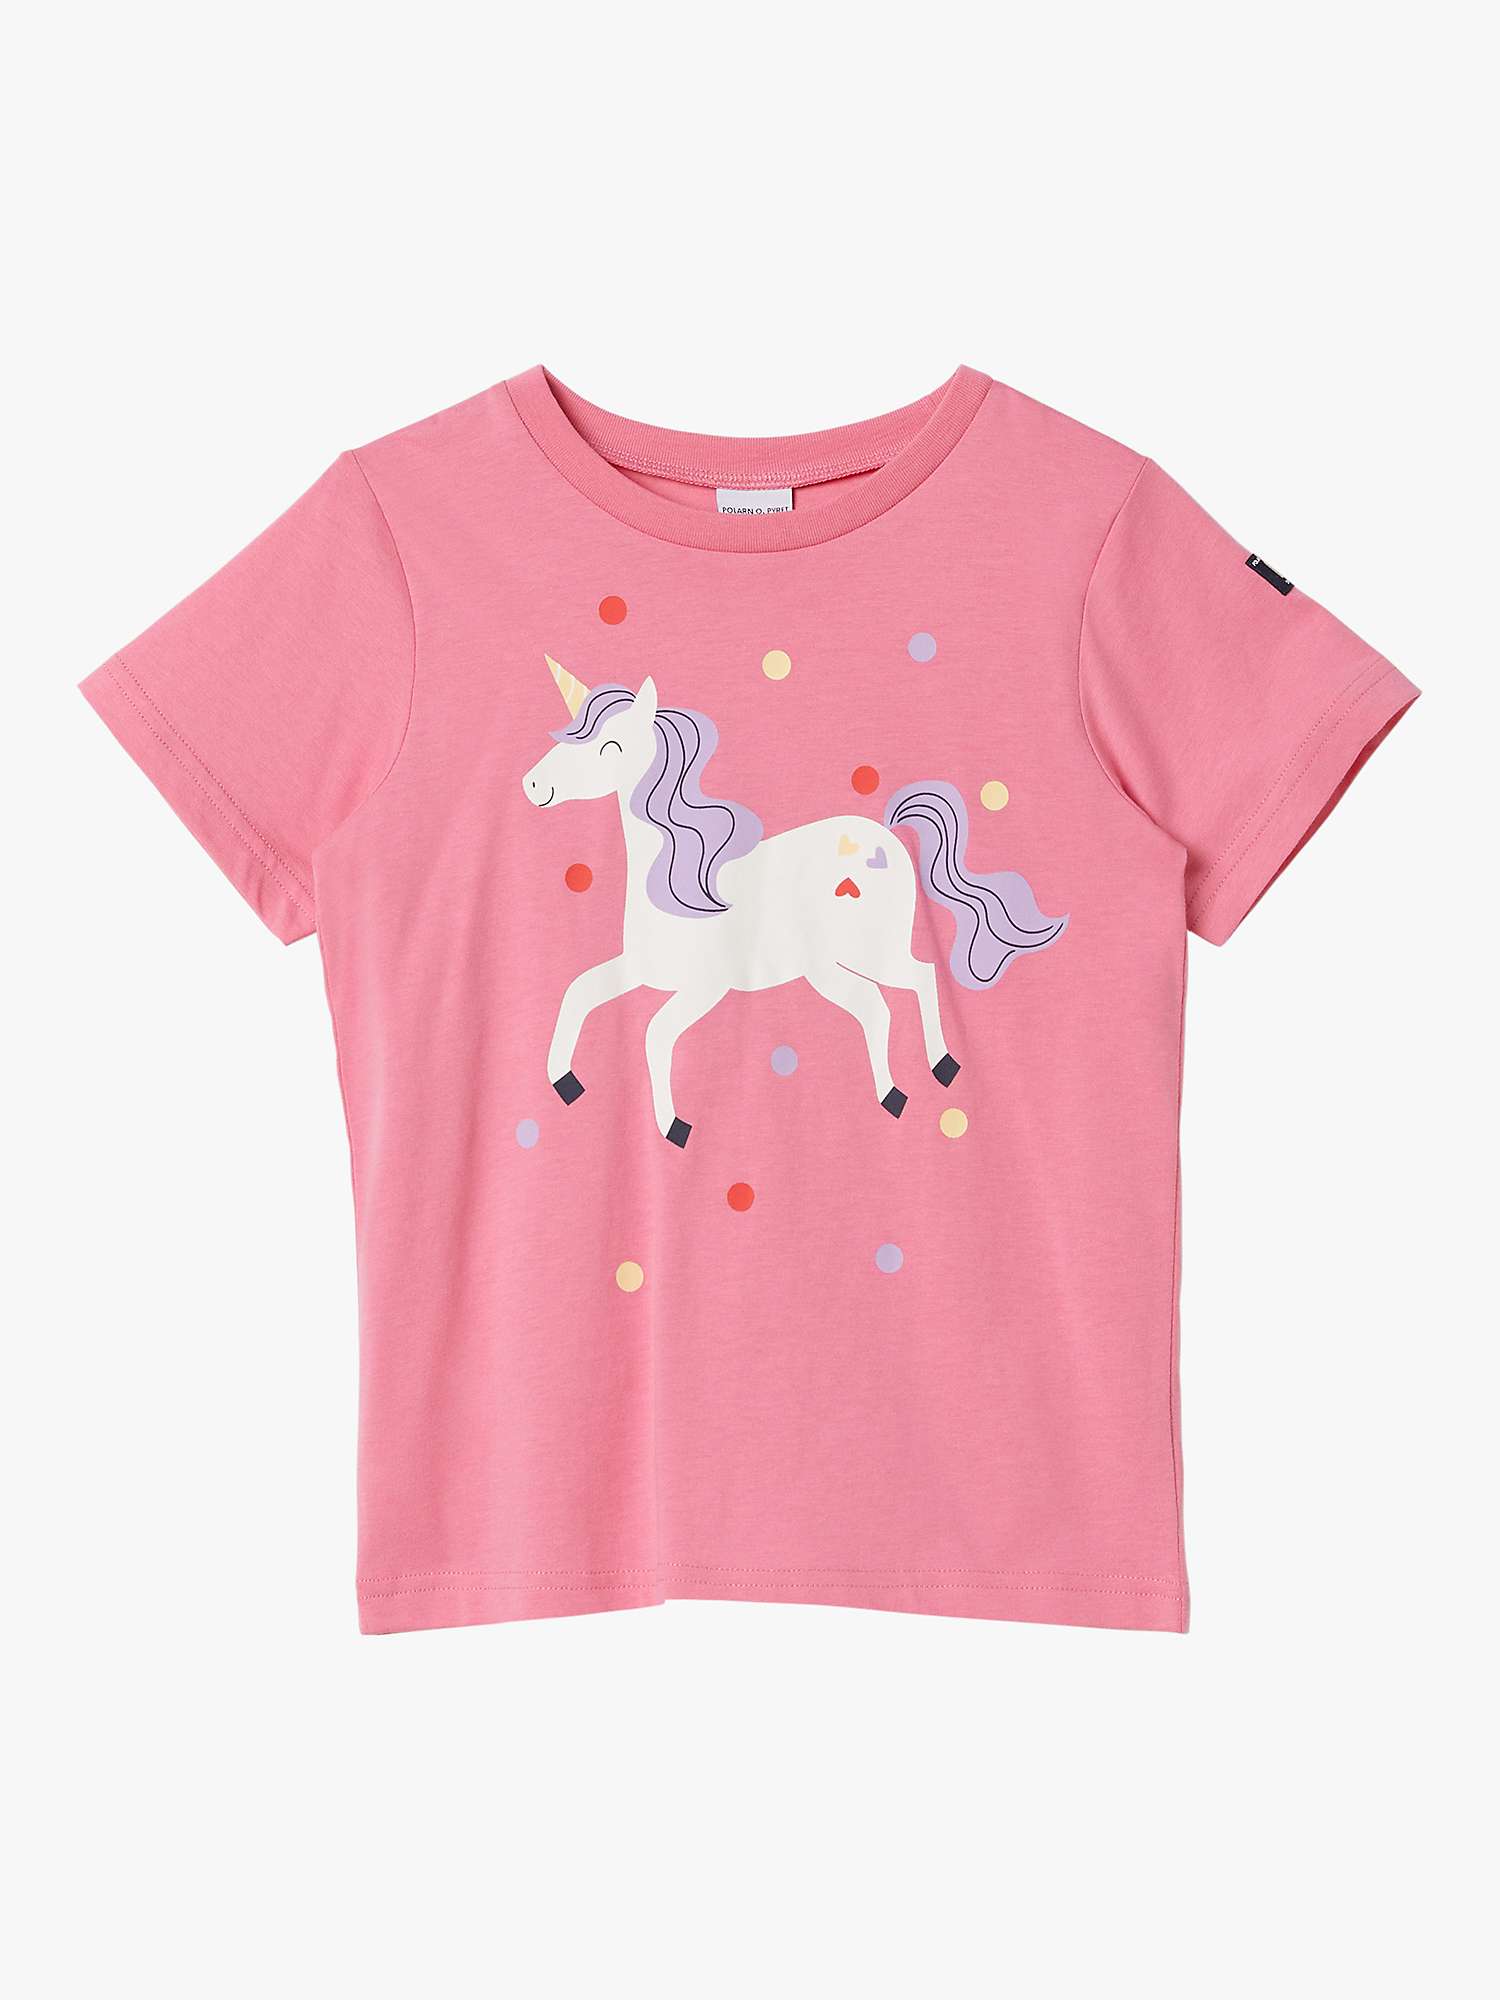 Buy Polarn O. Pyret Kids' GOTS Organic Cotton Unicorn T-Shirt, Pink Online at johnlewis.com